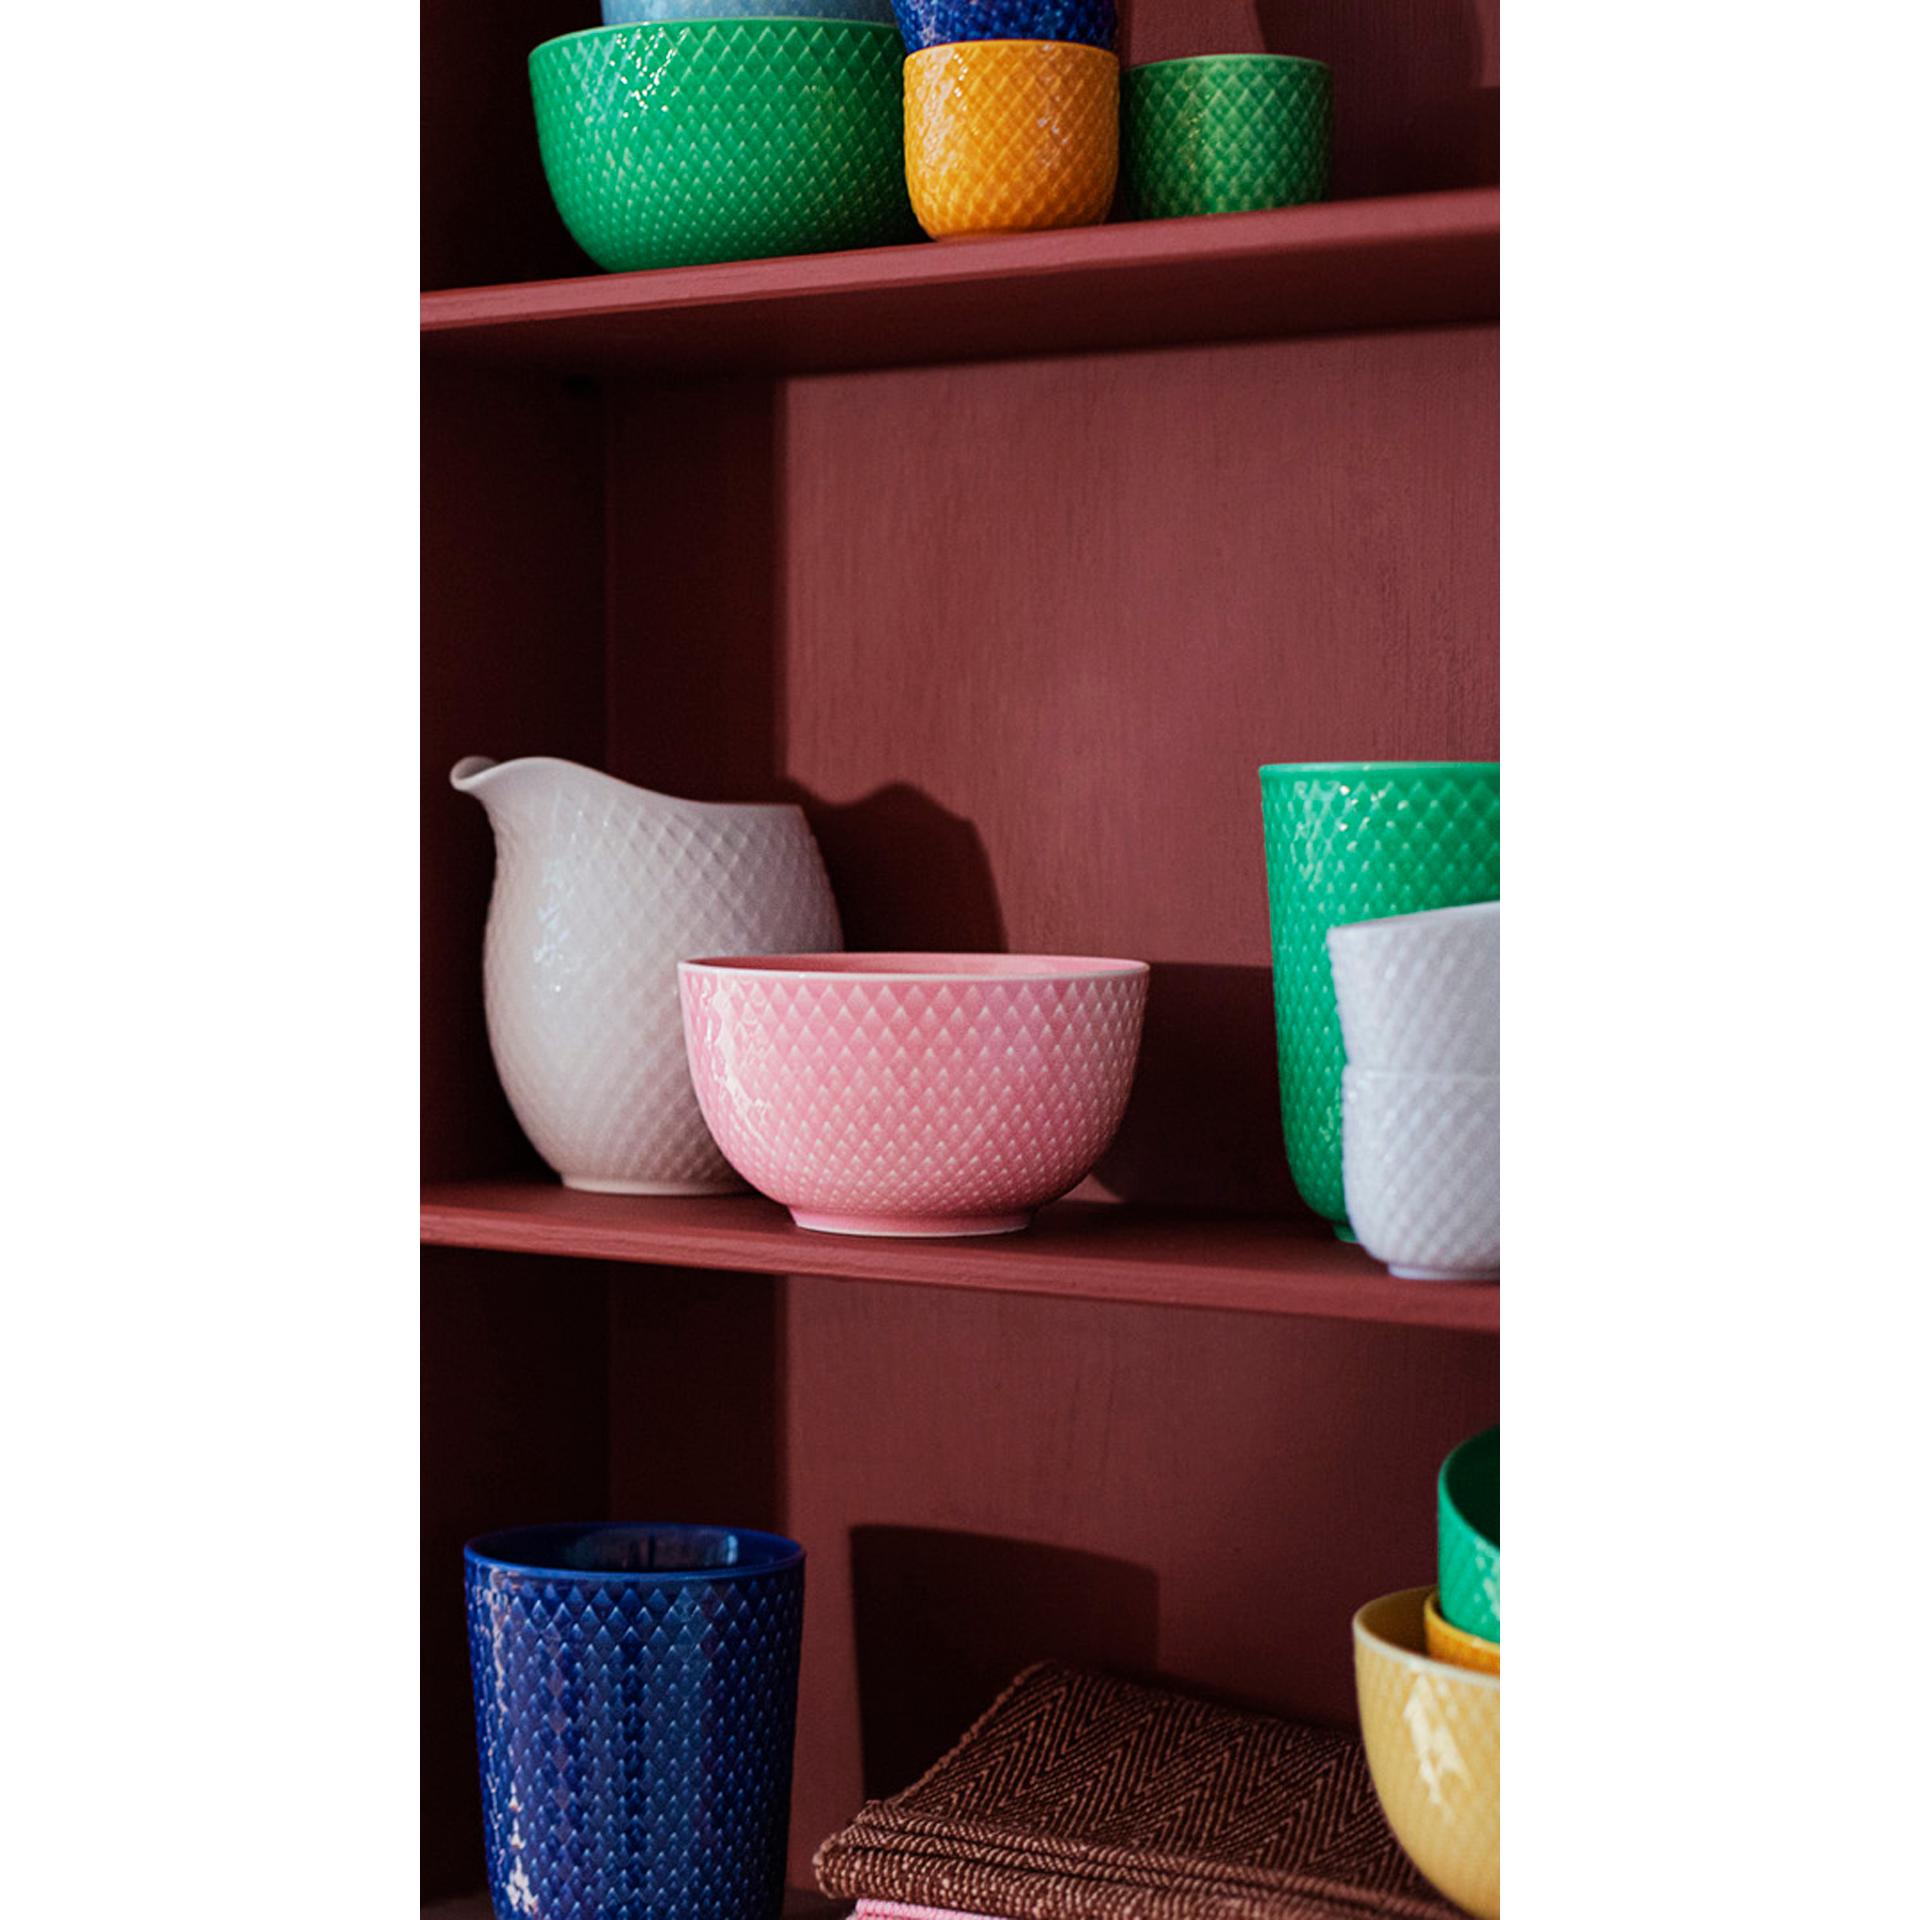 Lyngby Porcelæn Rhombe Color Mugs Porslin 33 CL, Turquoise